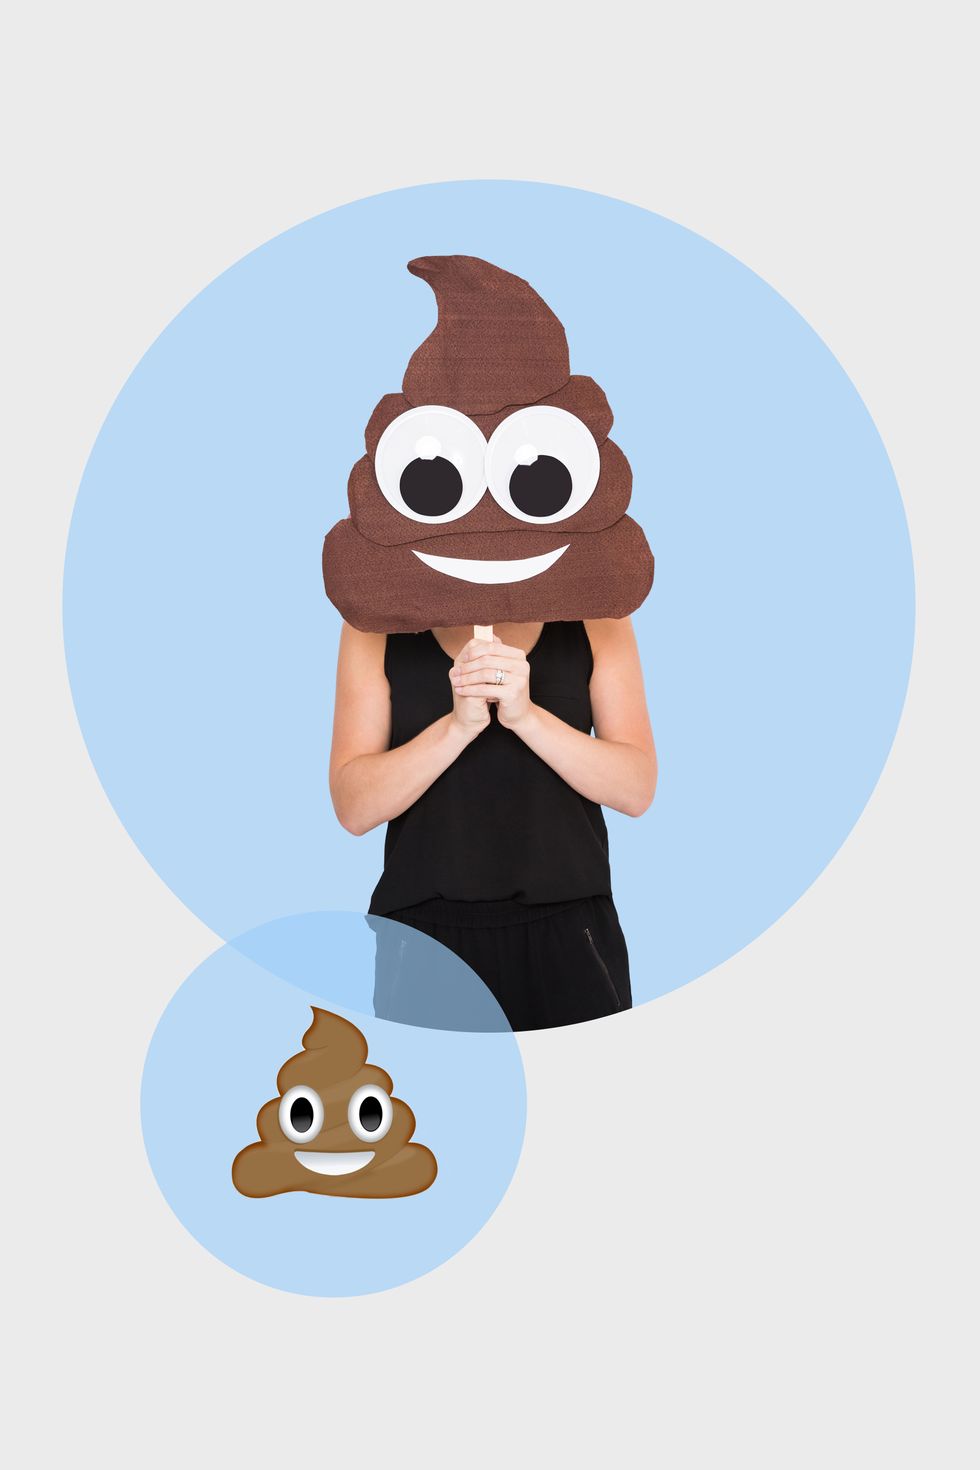 DIY Poop Emoji Soap Recipe For Kids - Kicking It With Kelly